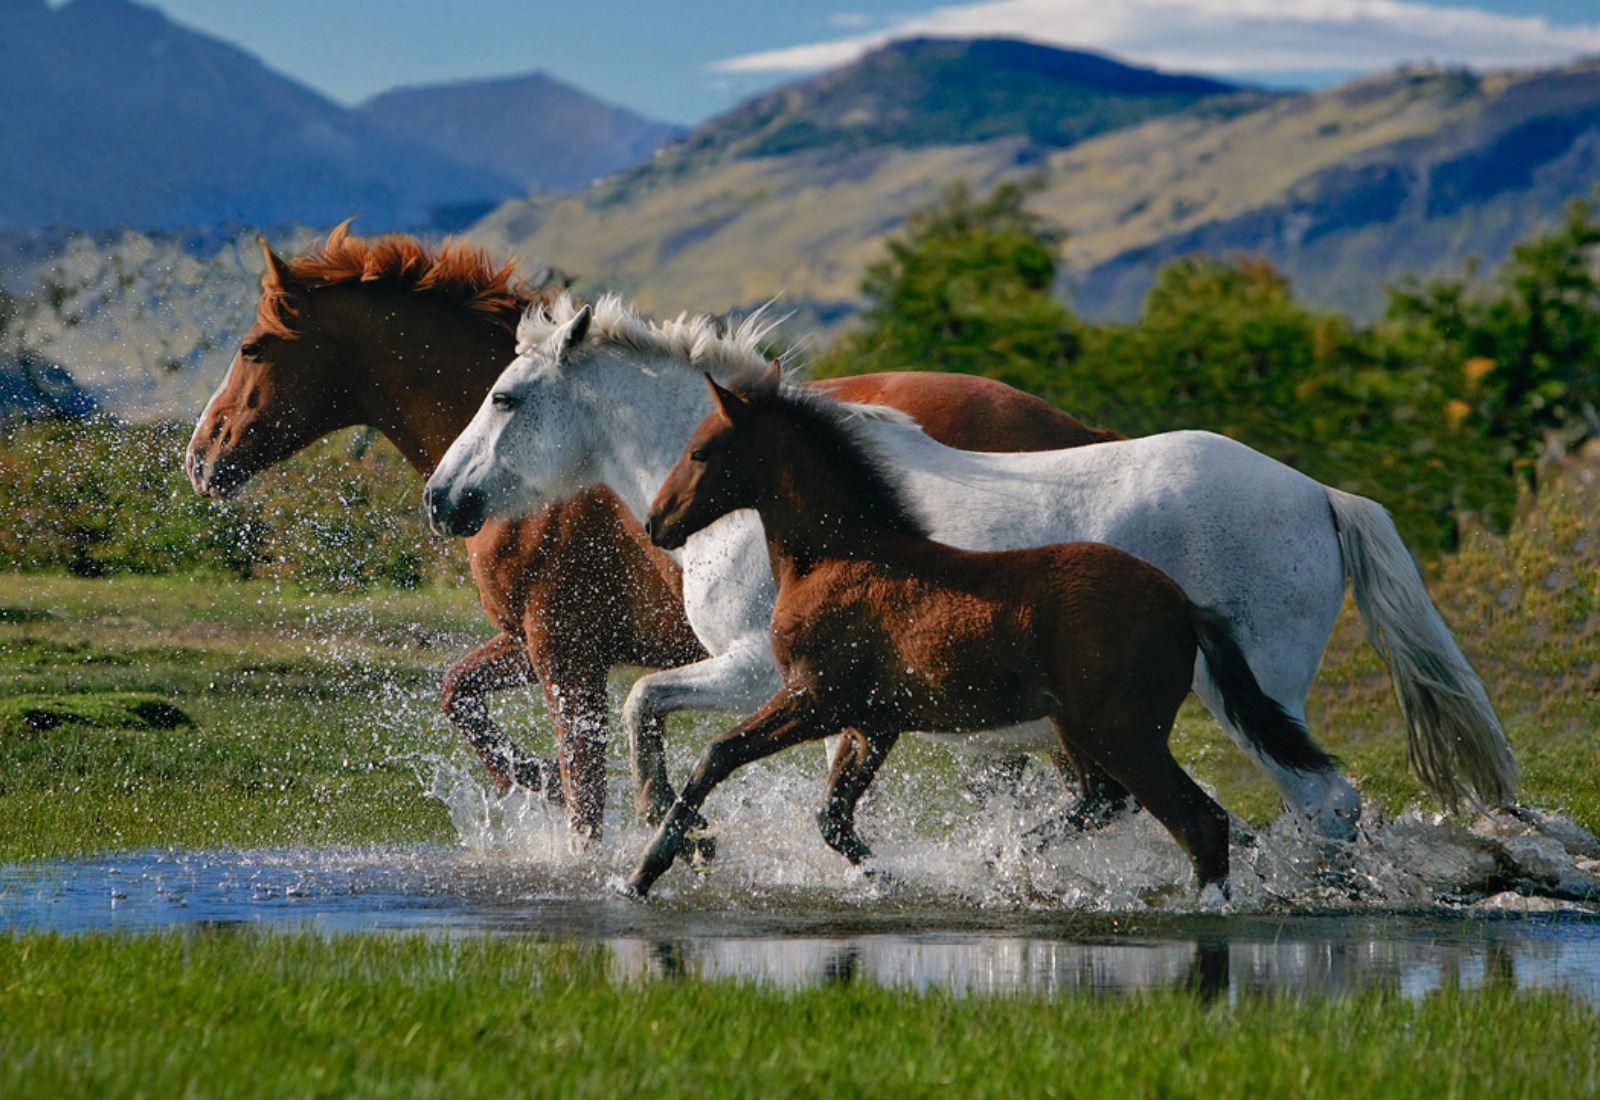 749414 descargar imagen animales, caballo, correr: fondos de pantalla y protectores de pantalla gratis